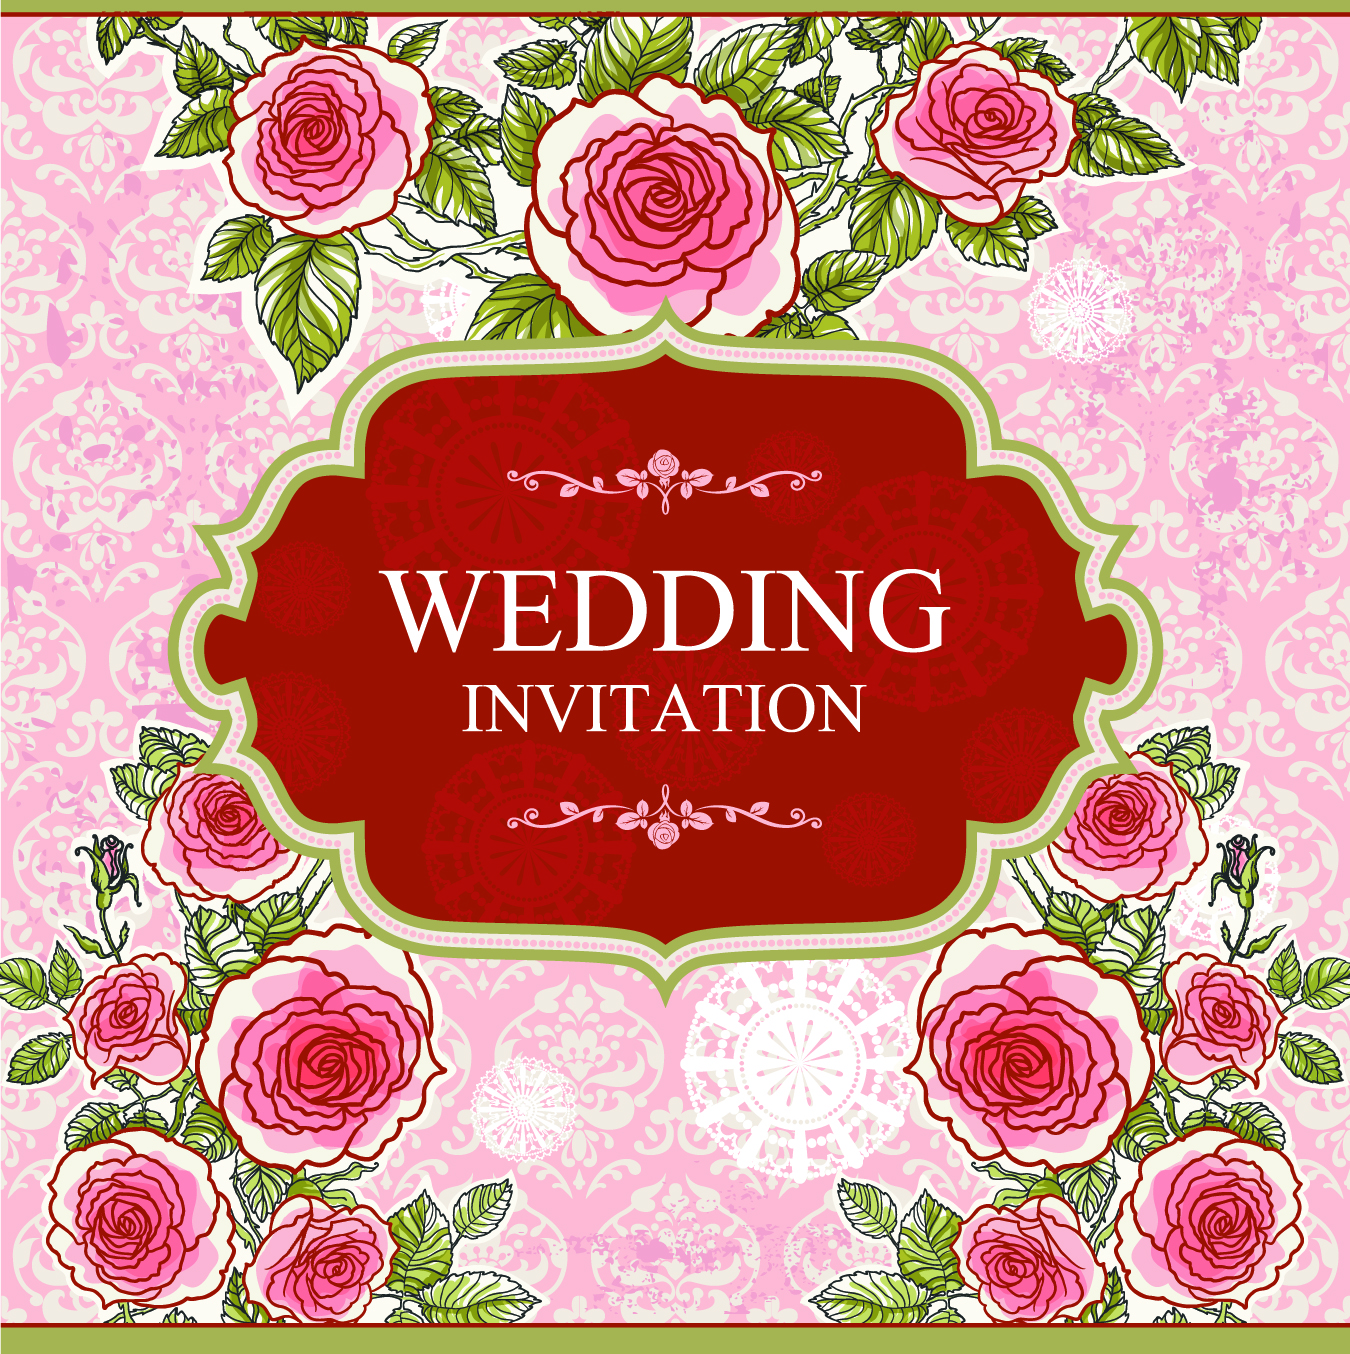 Download Floral Wedding Invitations Vector » Векторные клипарты ...